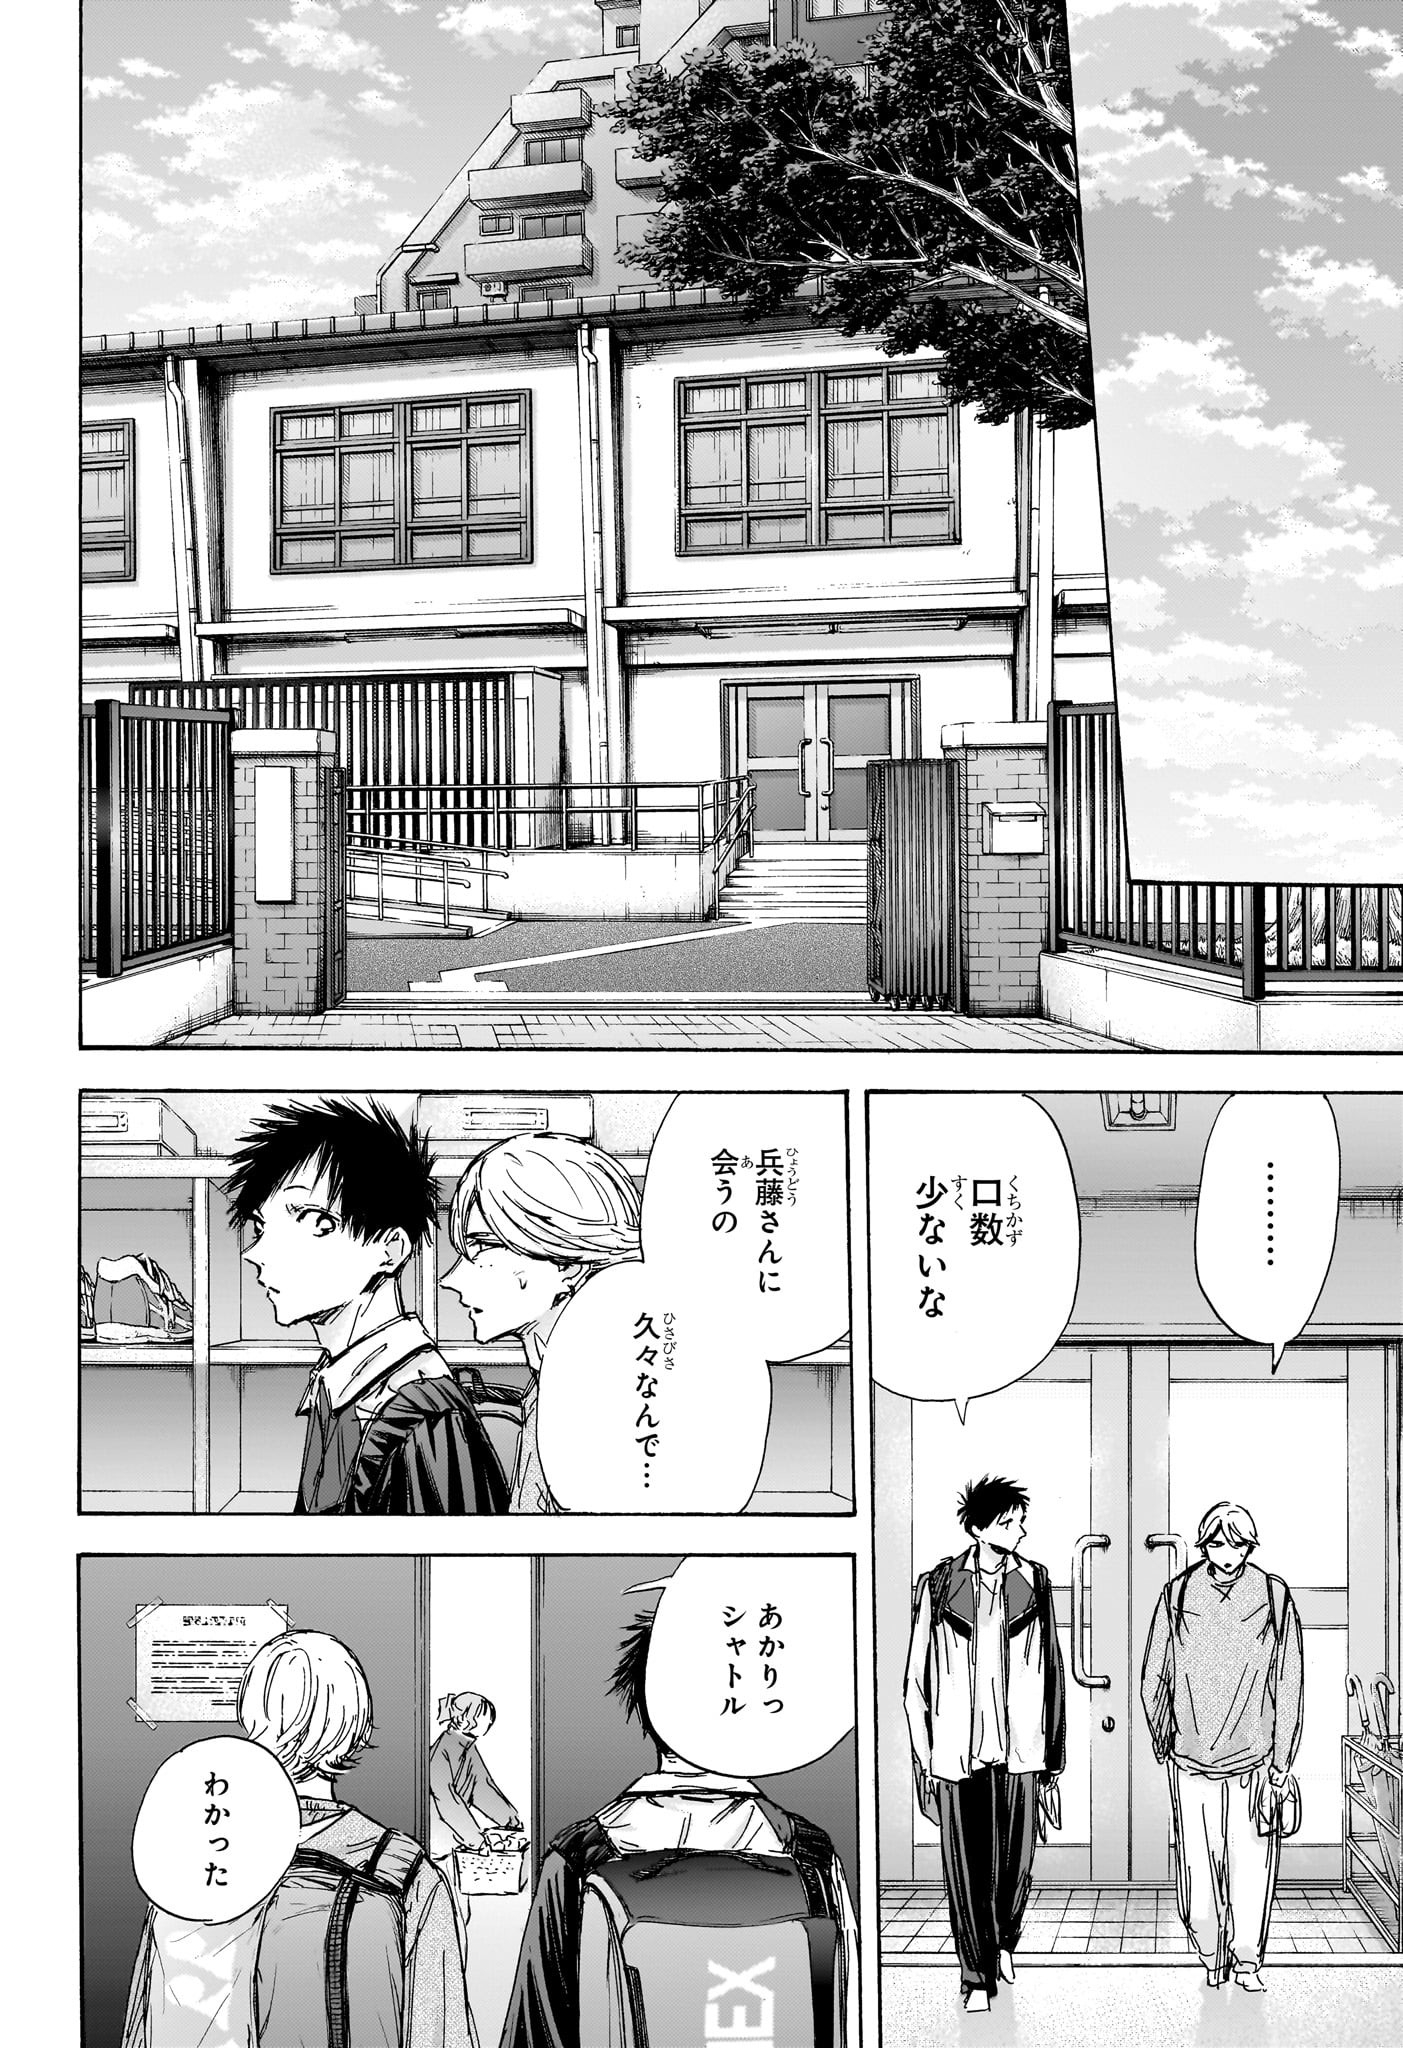 Ao no Hako - Chapter 128 - Page 4